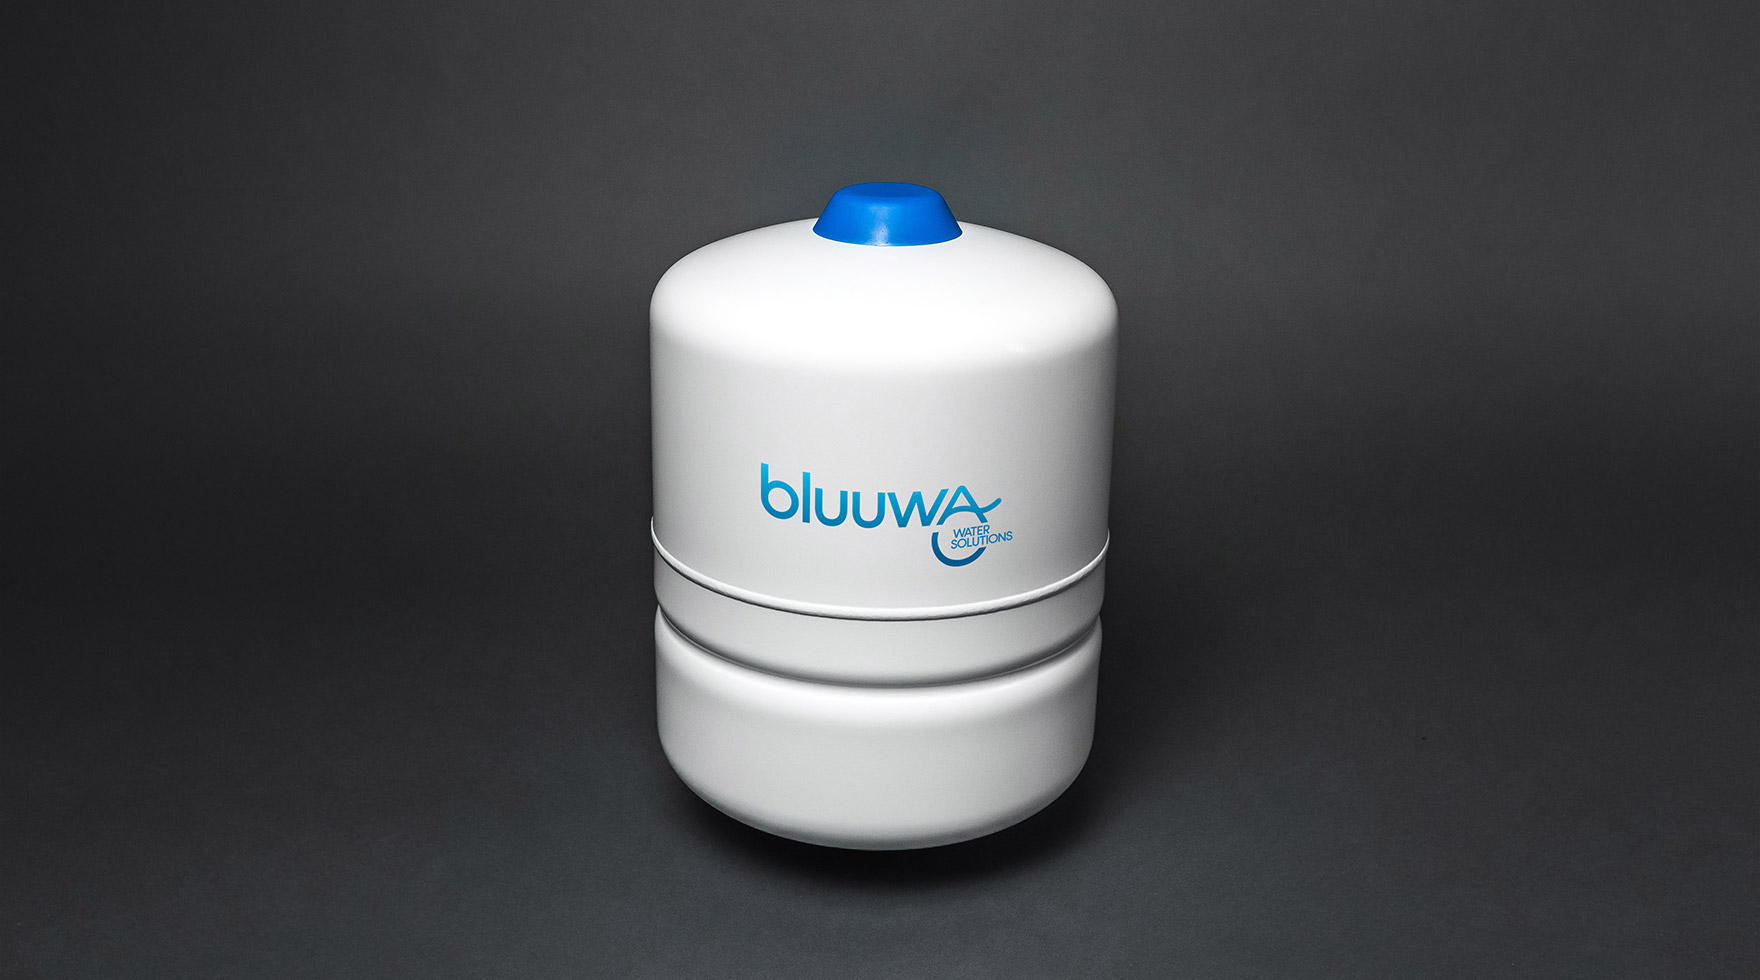 bluuwa-watersolutions-2-online-shop-foto-produktion-agentur-berlin